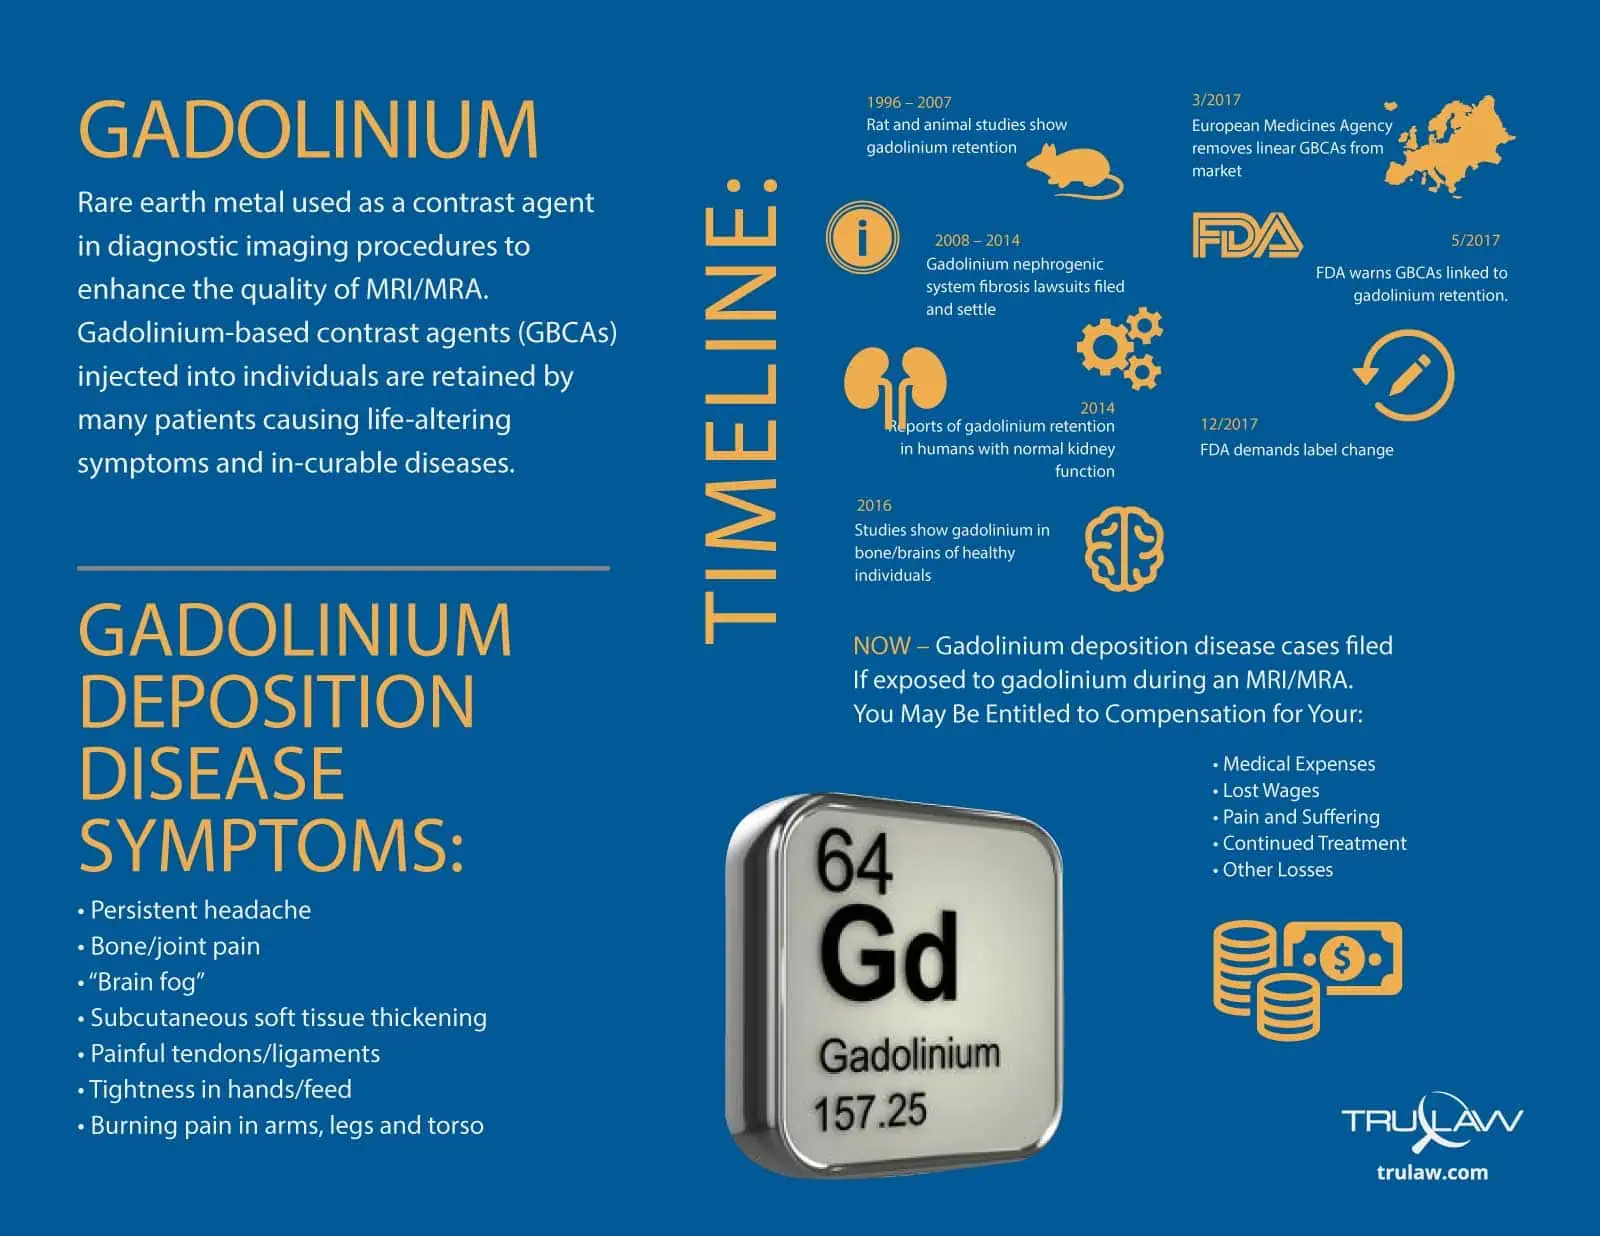 Gadolinium deposition disease timeline